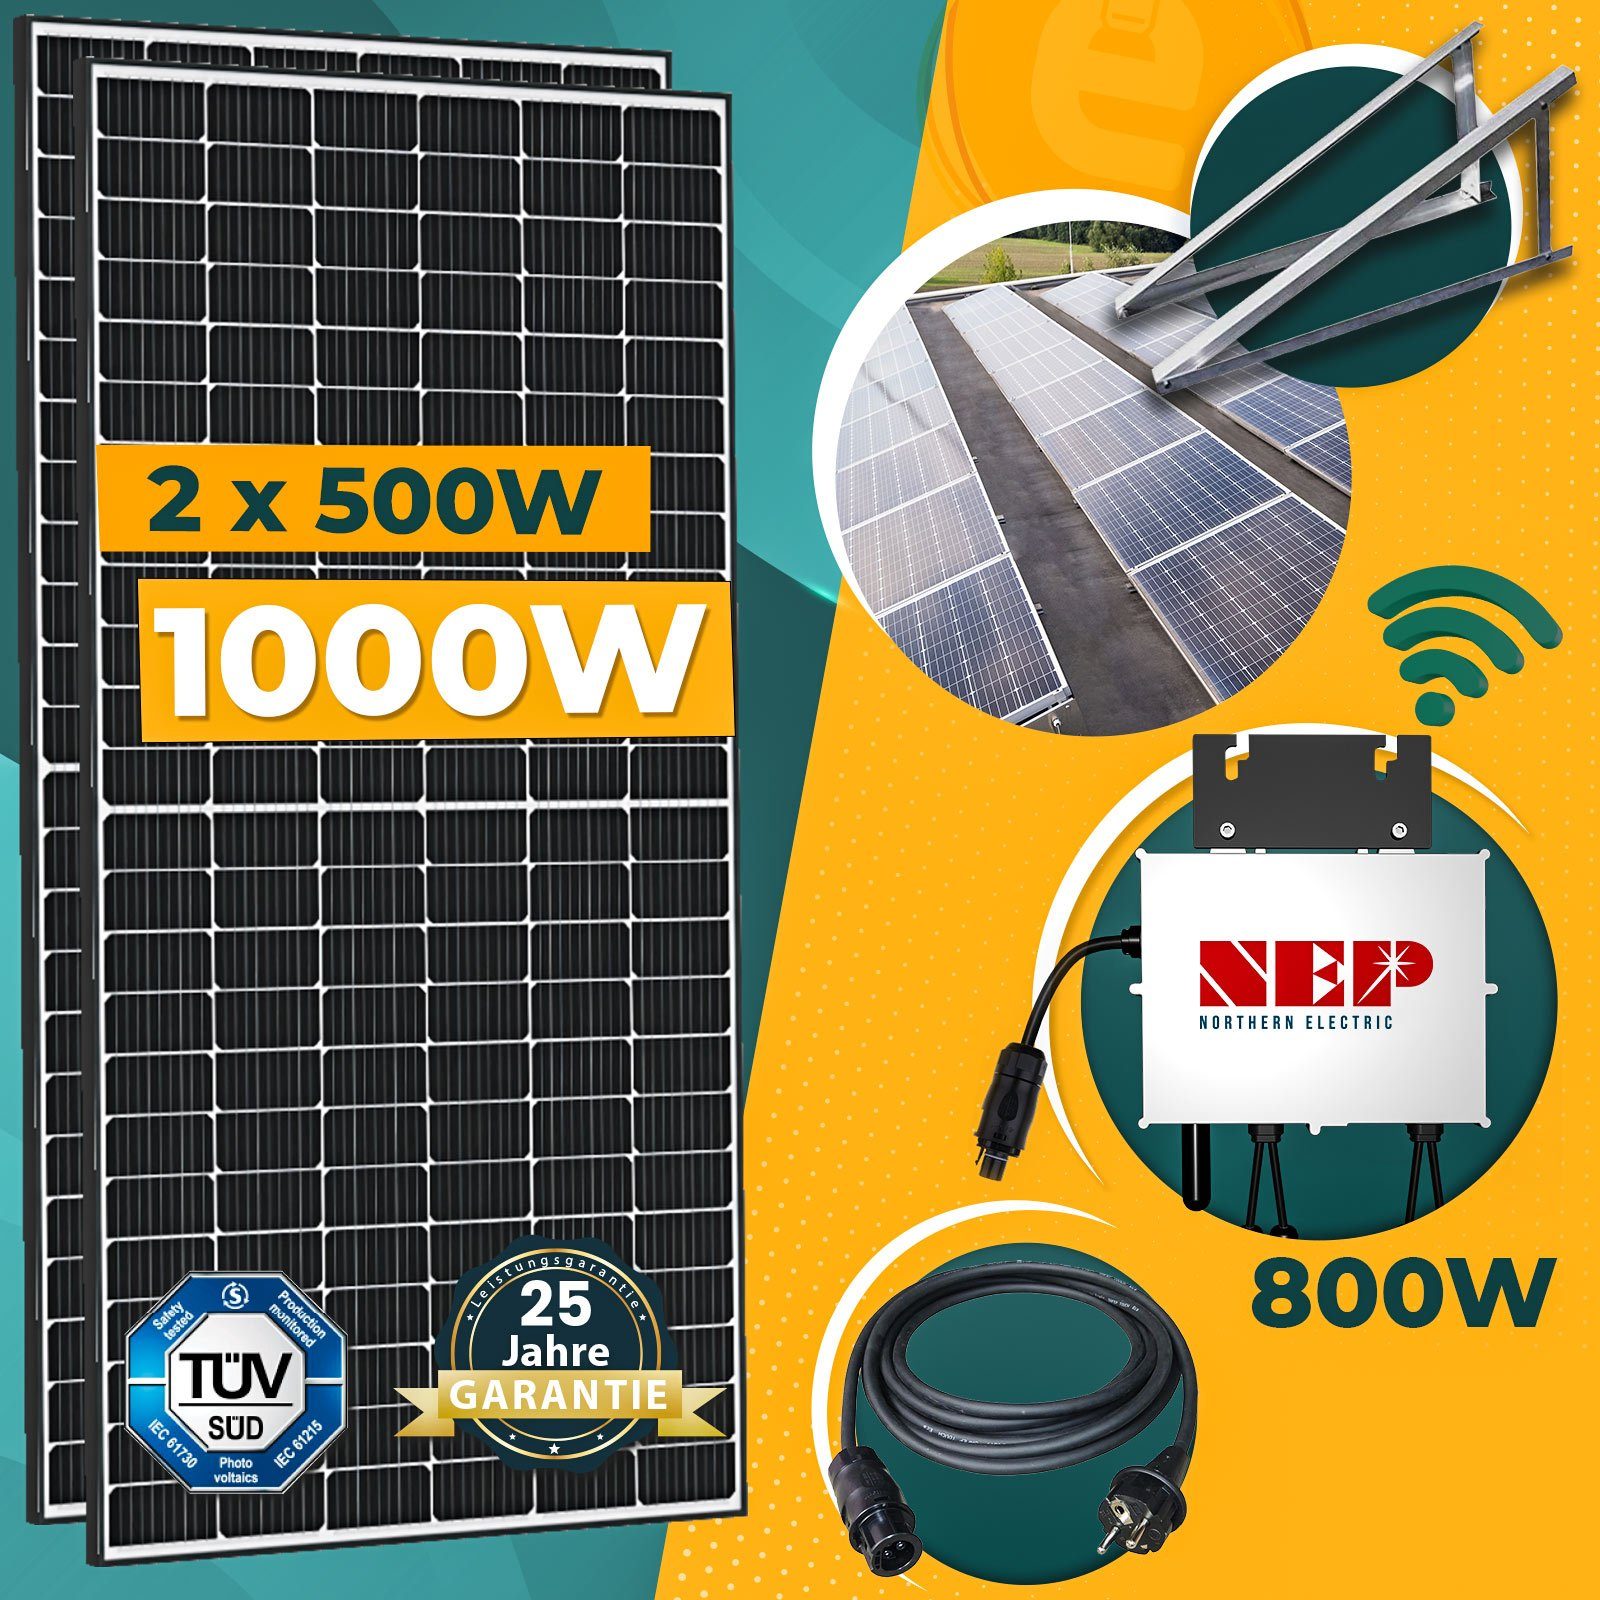 1600W Balkonkraftwerk Komplettset inkl. 400W Solarmodule, Hoymiles HMS-1600W-4T  Wechselrichter, DTU-Wlite-S, Wielandstecker - Enprove Solar GmbH